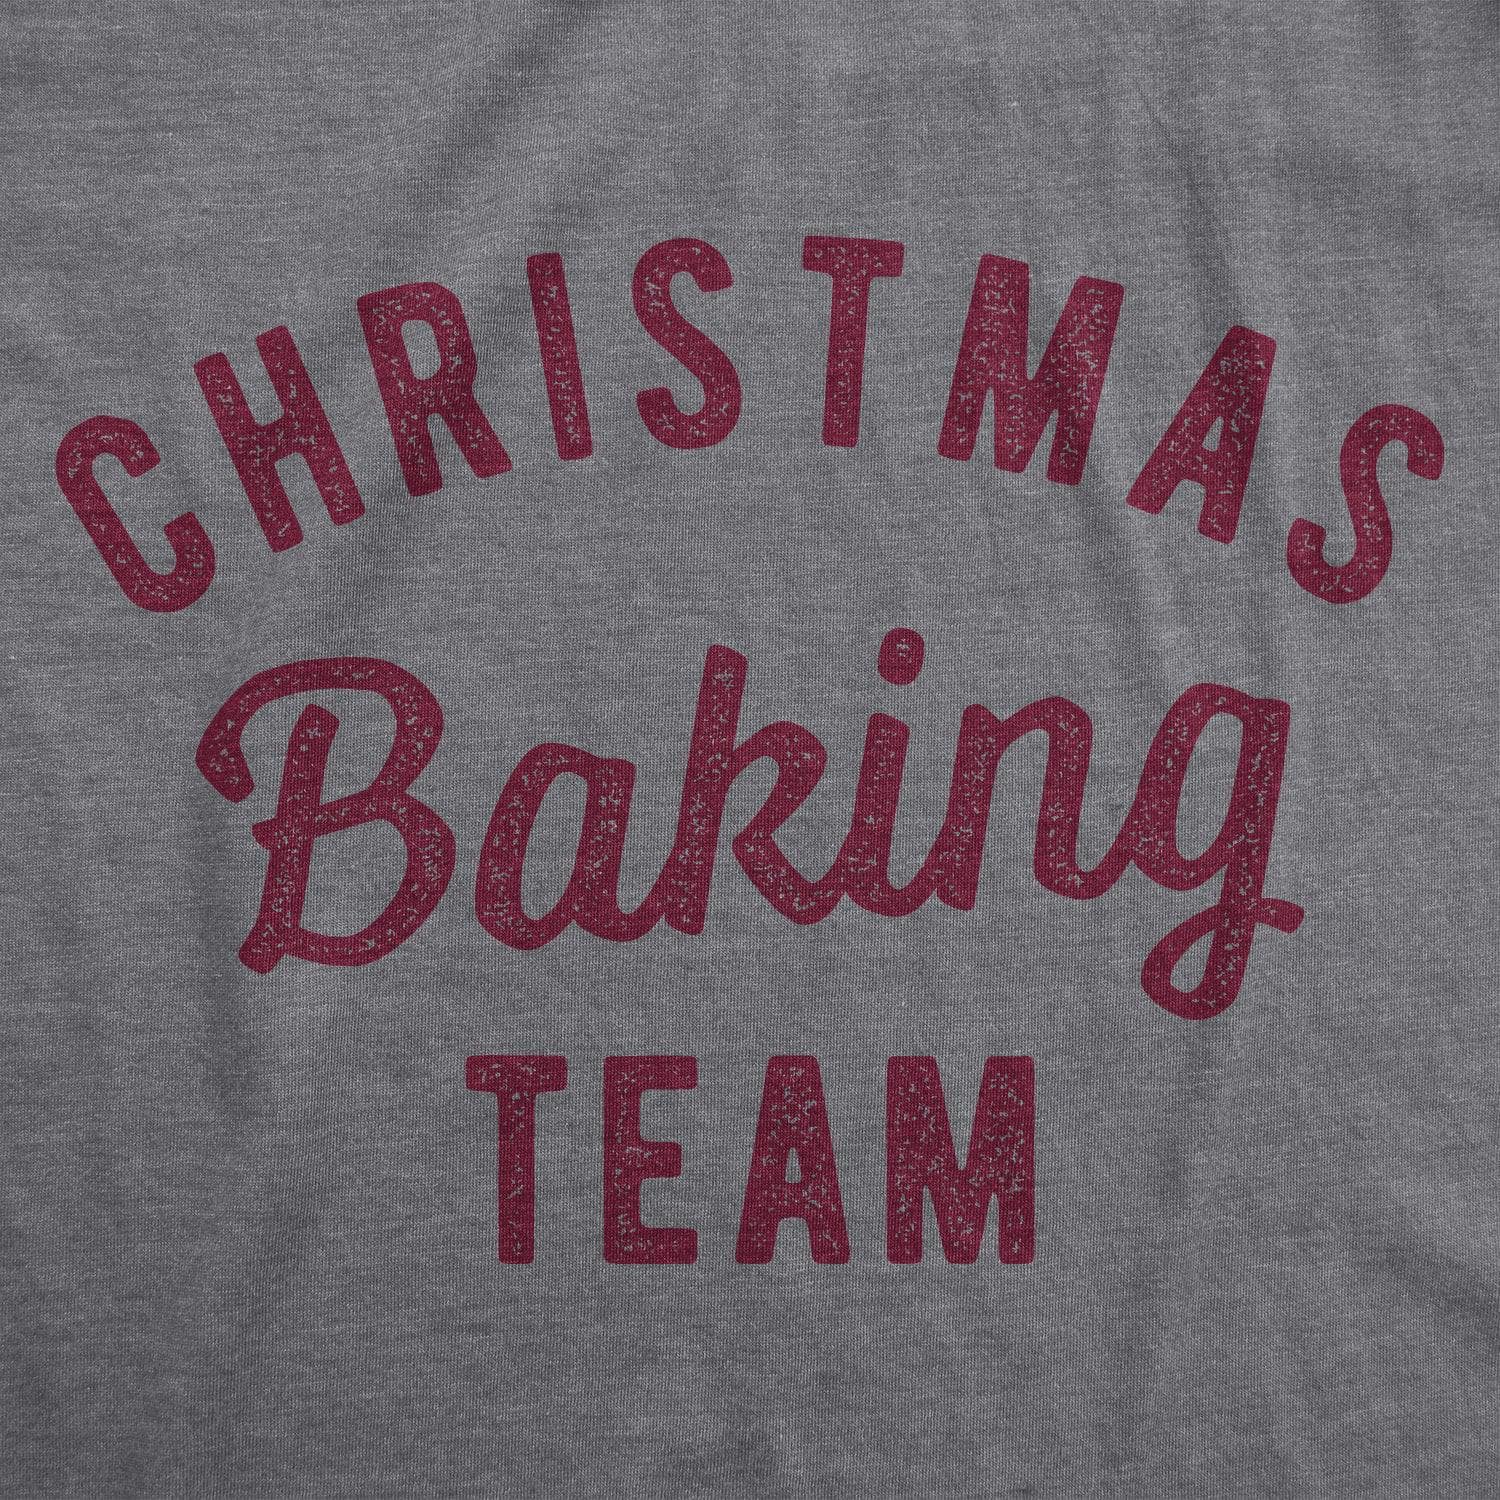 Christmas Baking Team Youth Tshirt  -  Crazy Dog T-Shirts